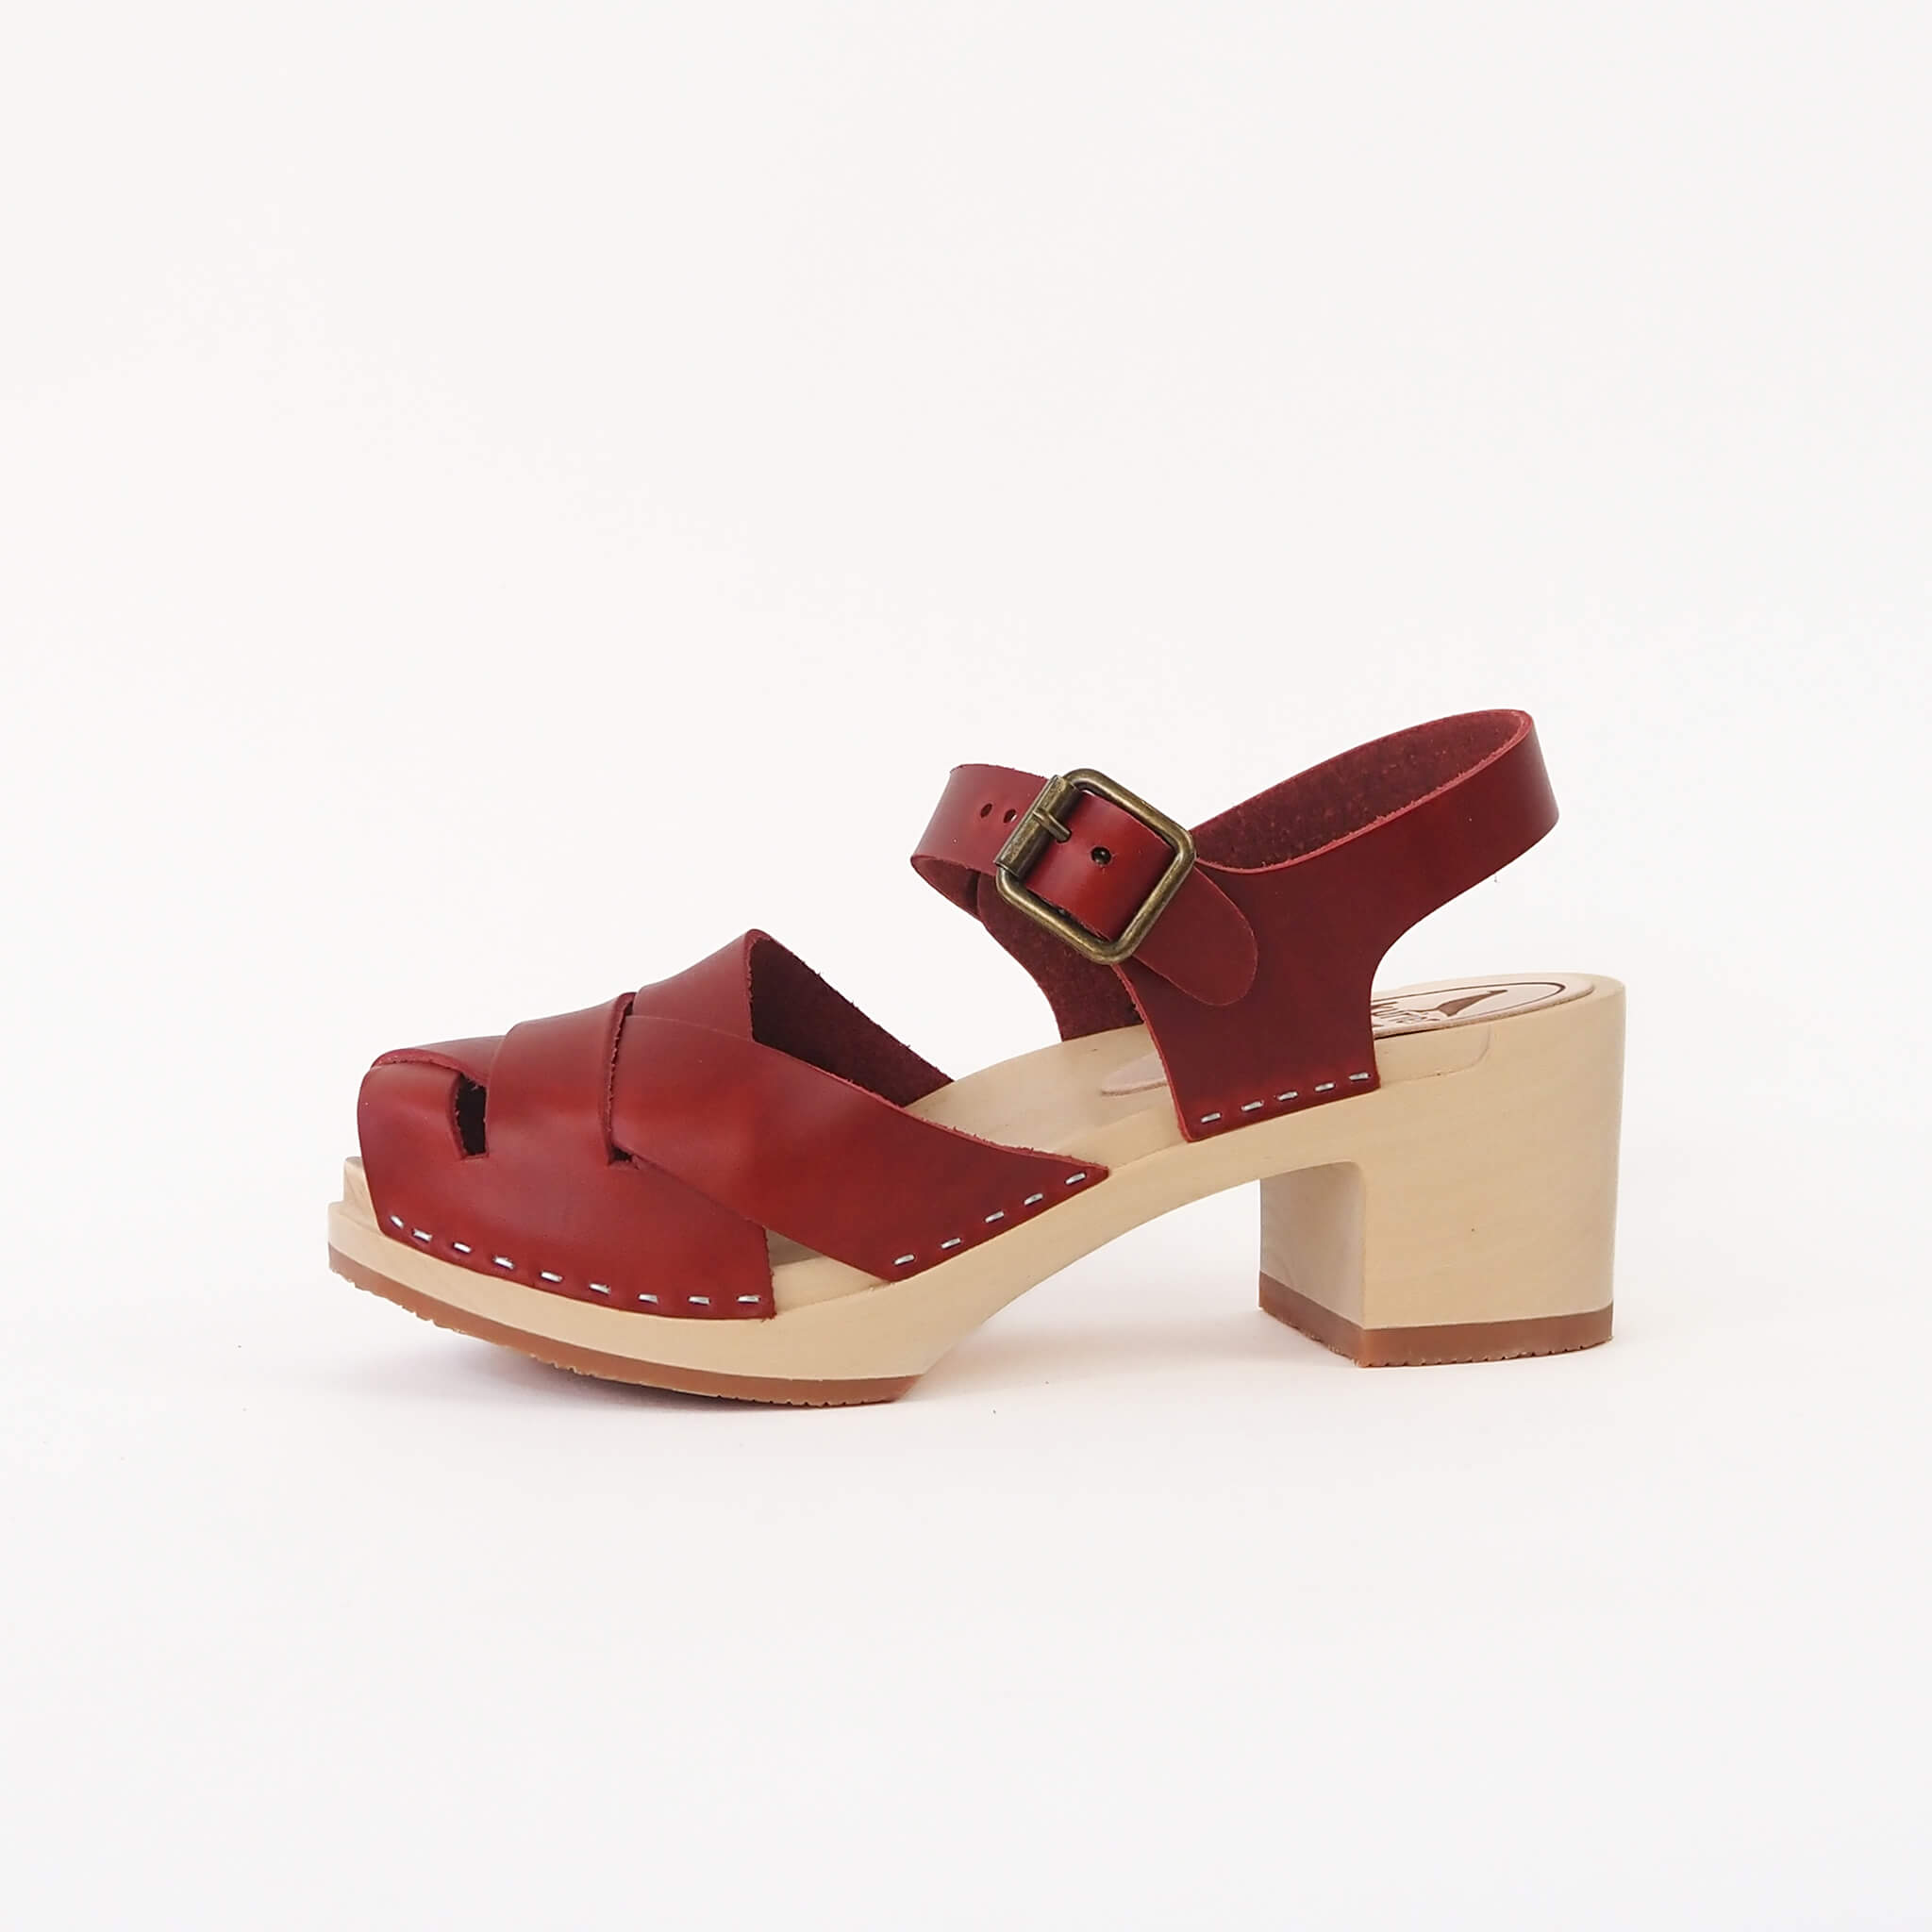 emelia clog high heel peep toe mary janesandal handmade american leather wood - cherry side view